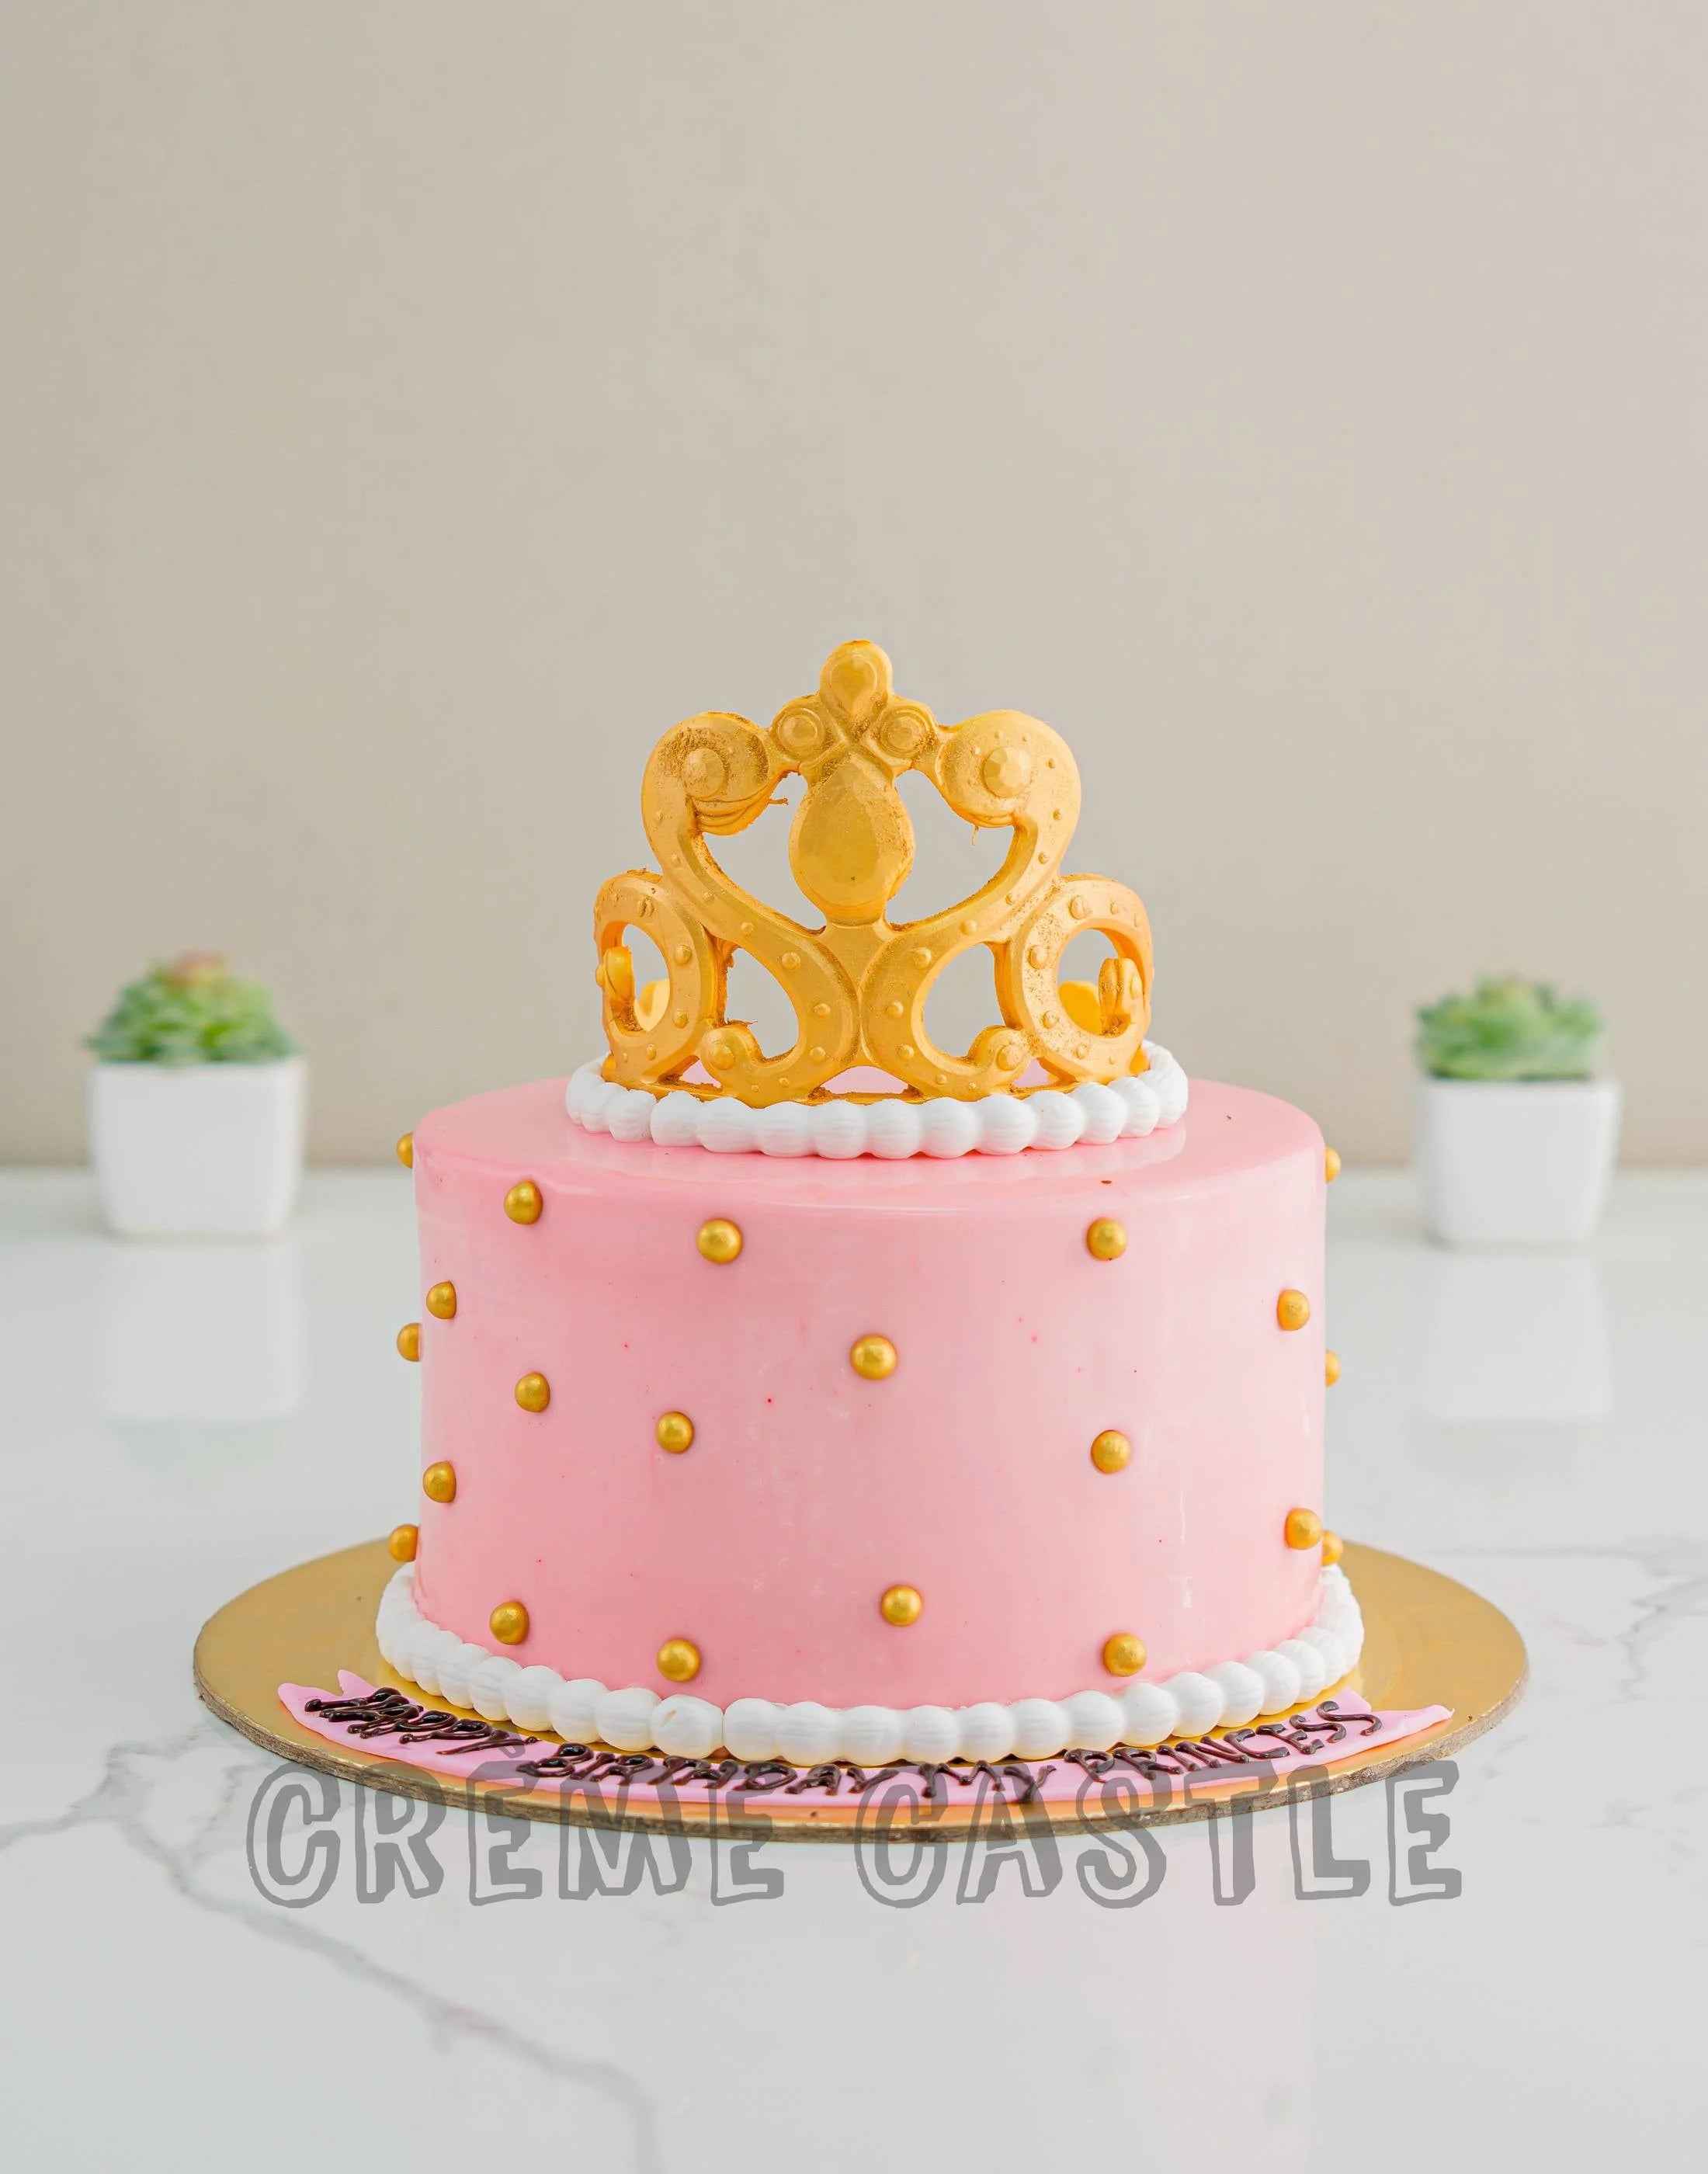 Princess cake, but make oldschool. : r/cakedecorating